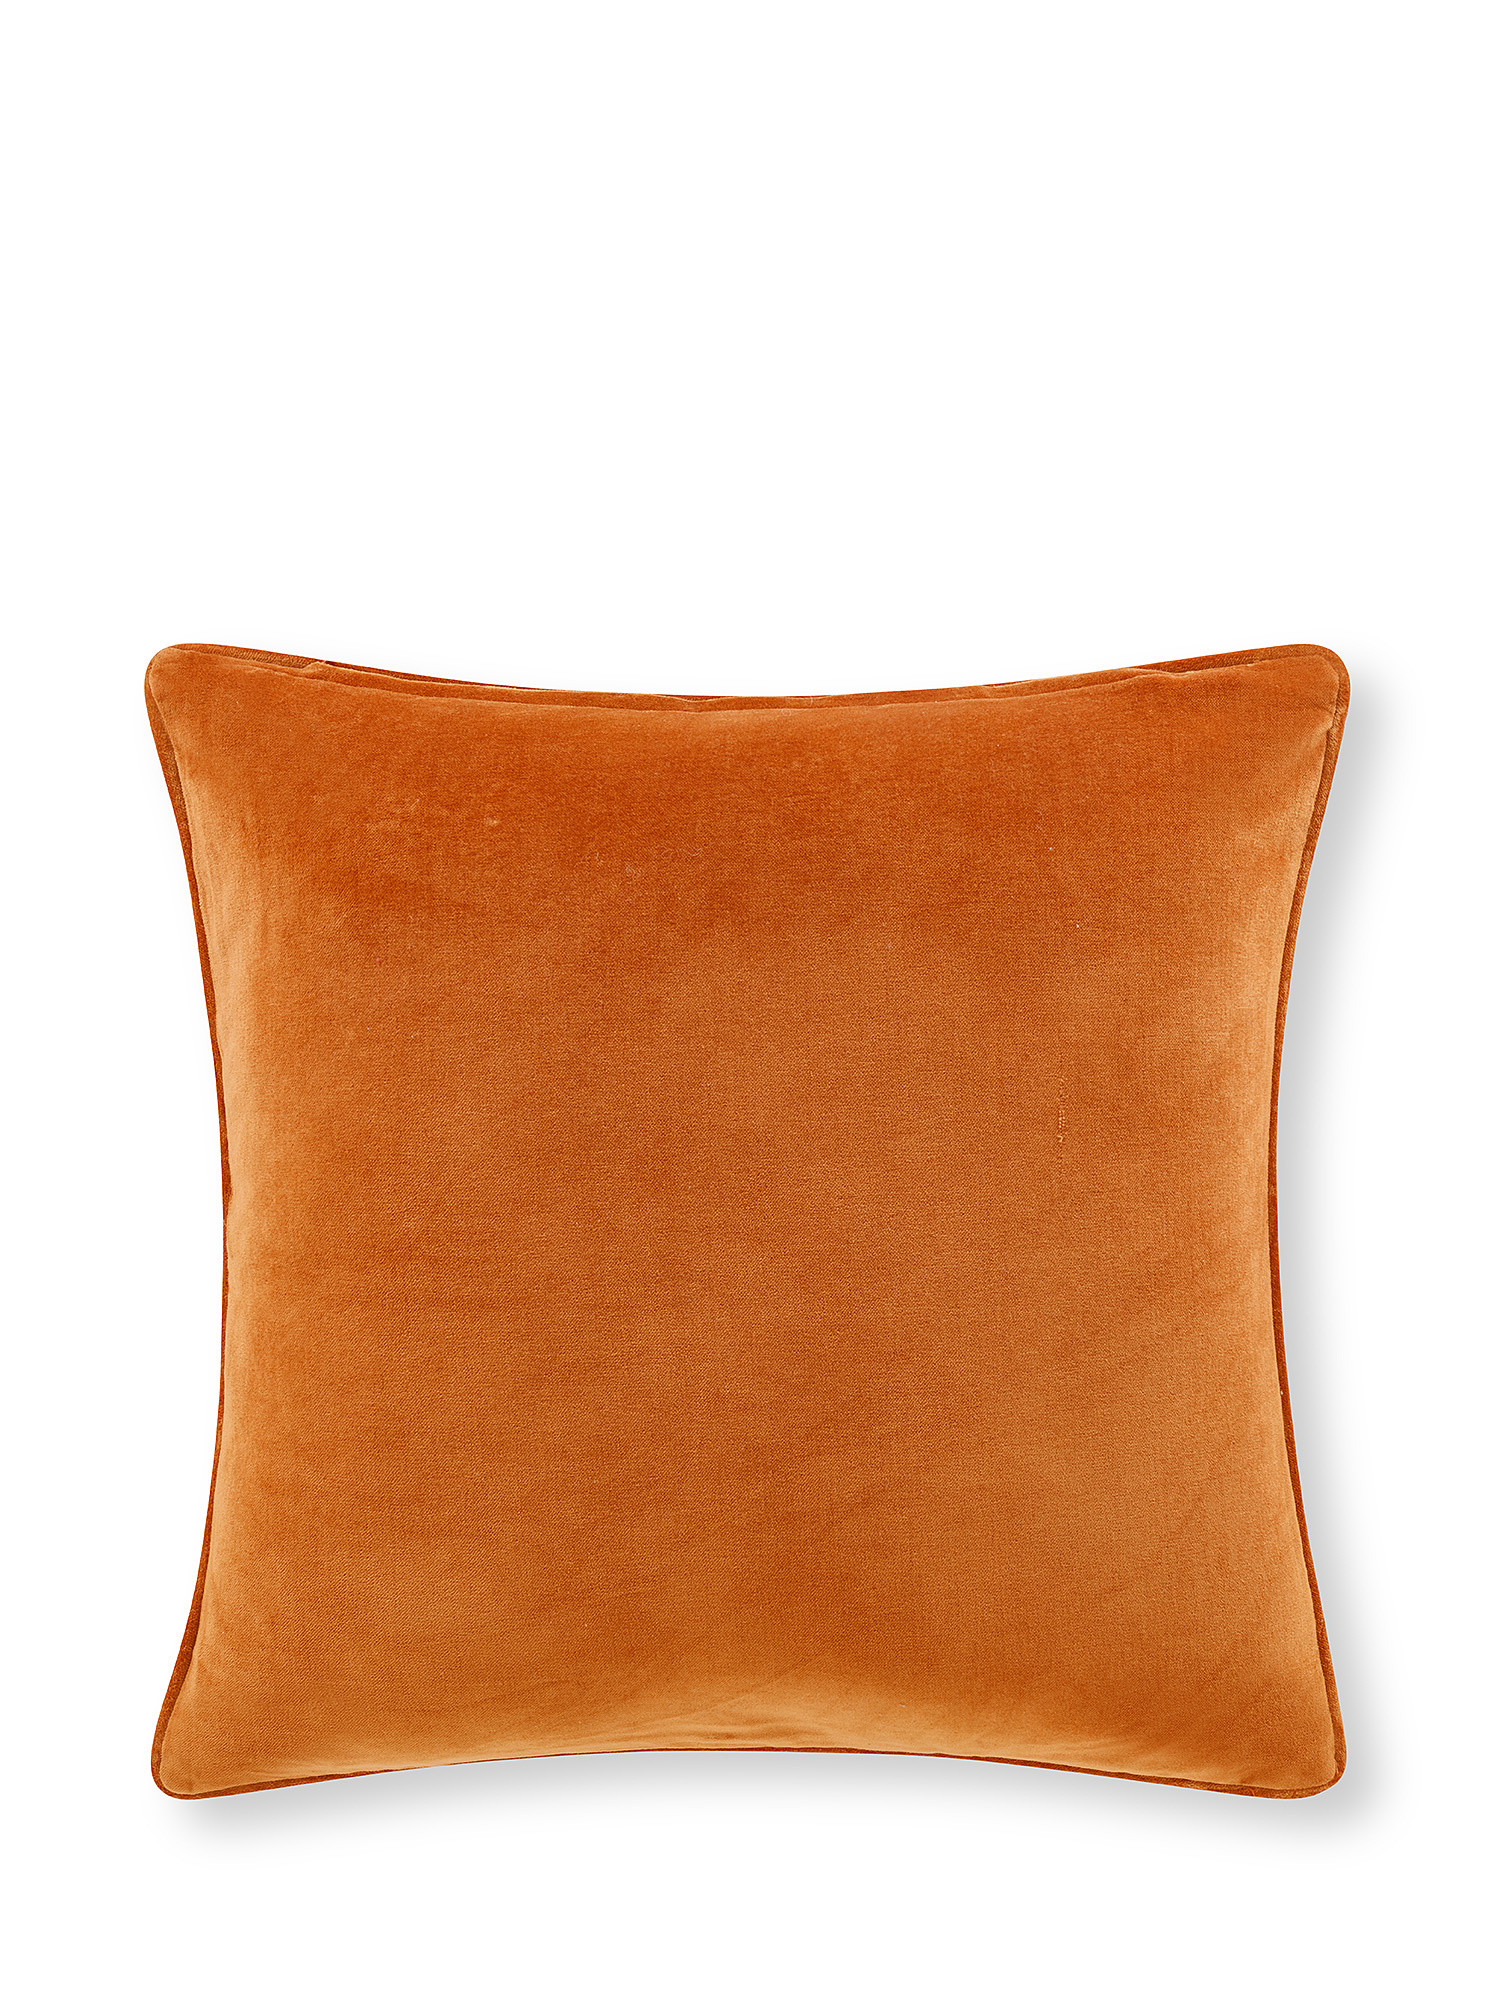 Velvet cushion with flower embroidery 45x45cm, Orange, large image number 1